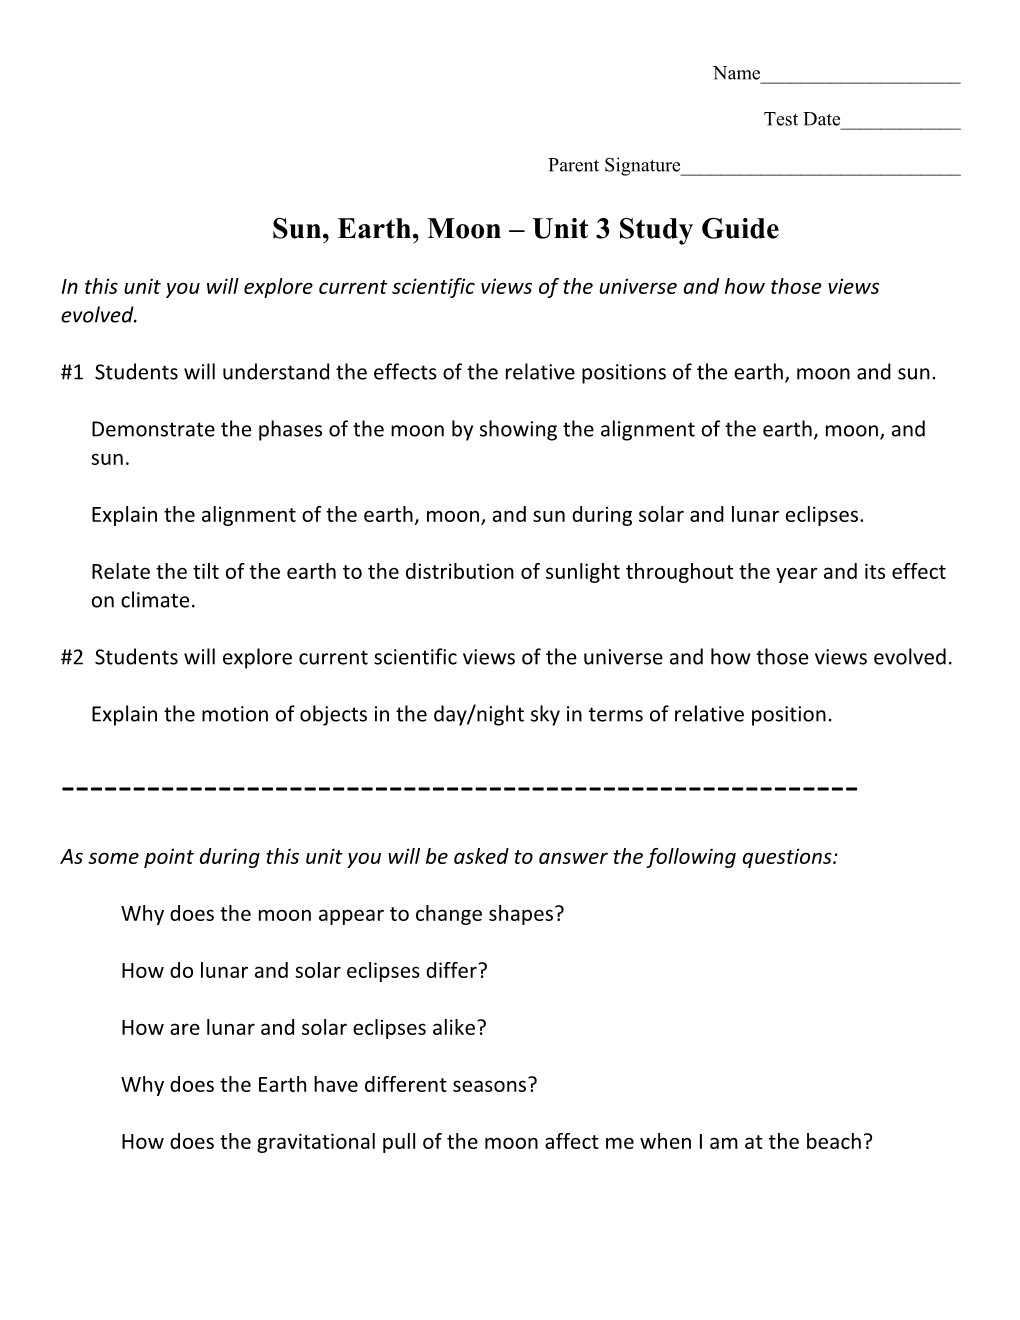 Sun, Earth, Moon Unit 3 Study Guide